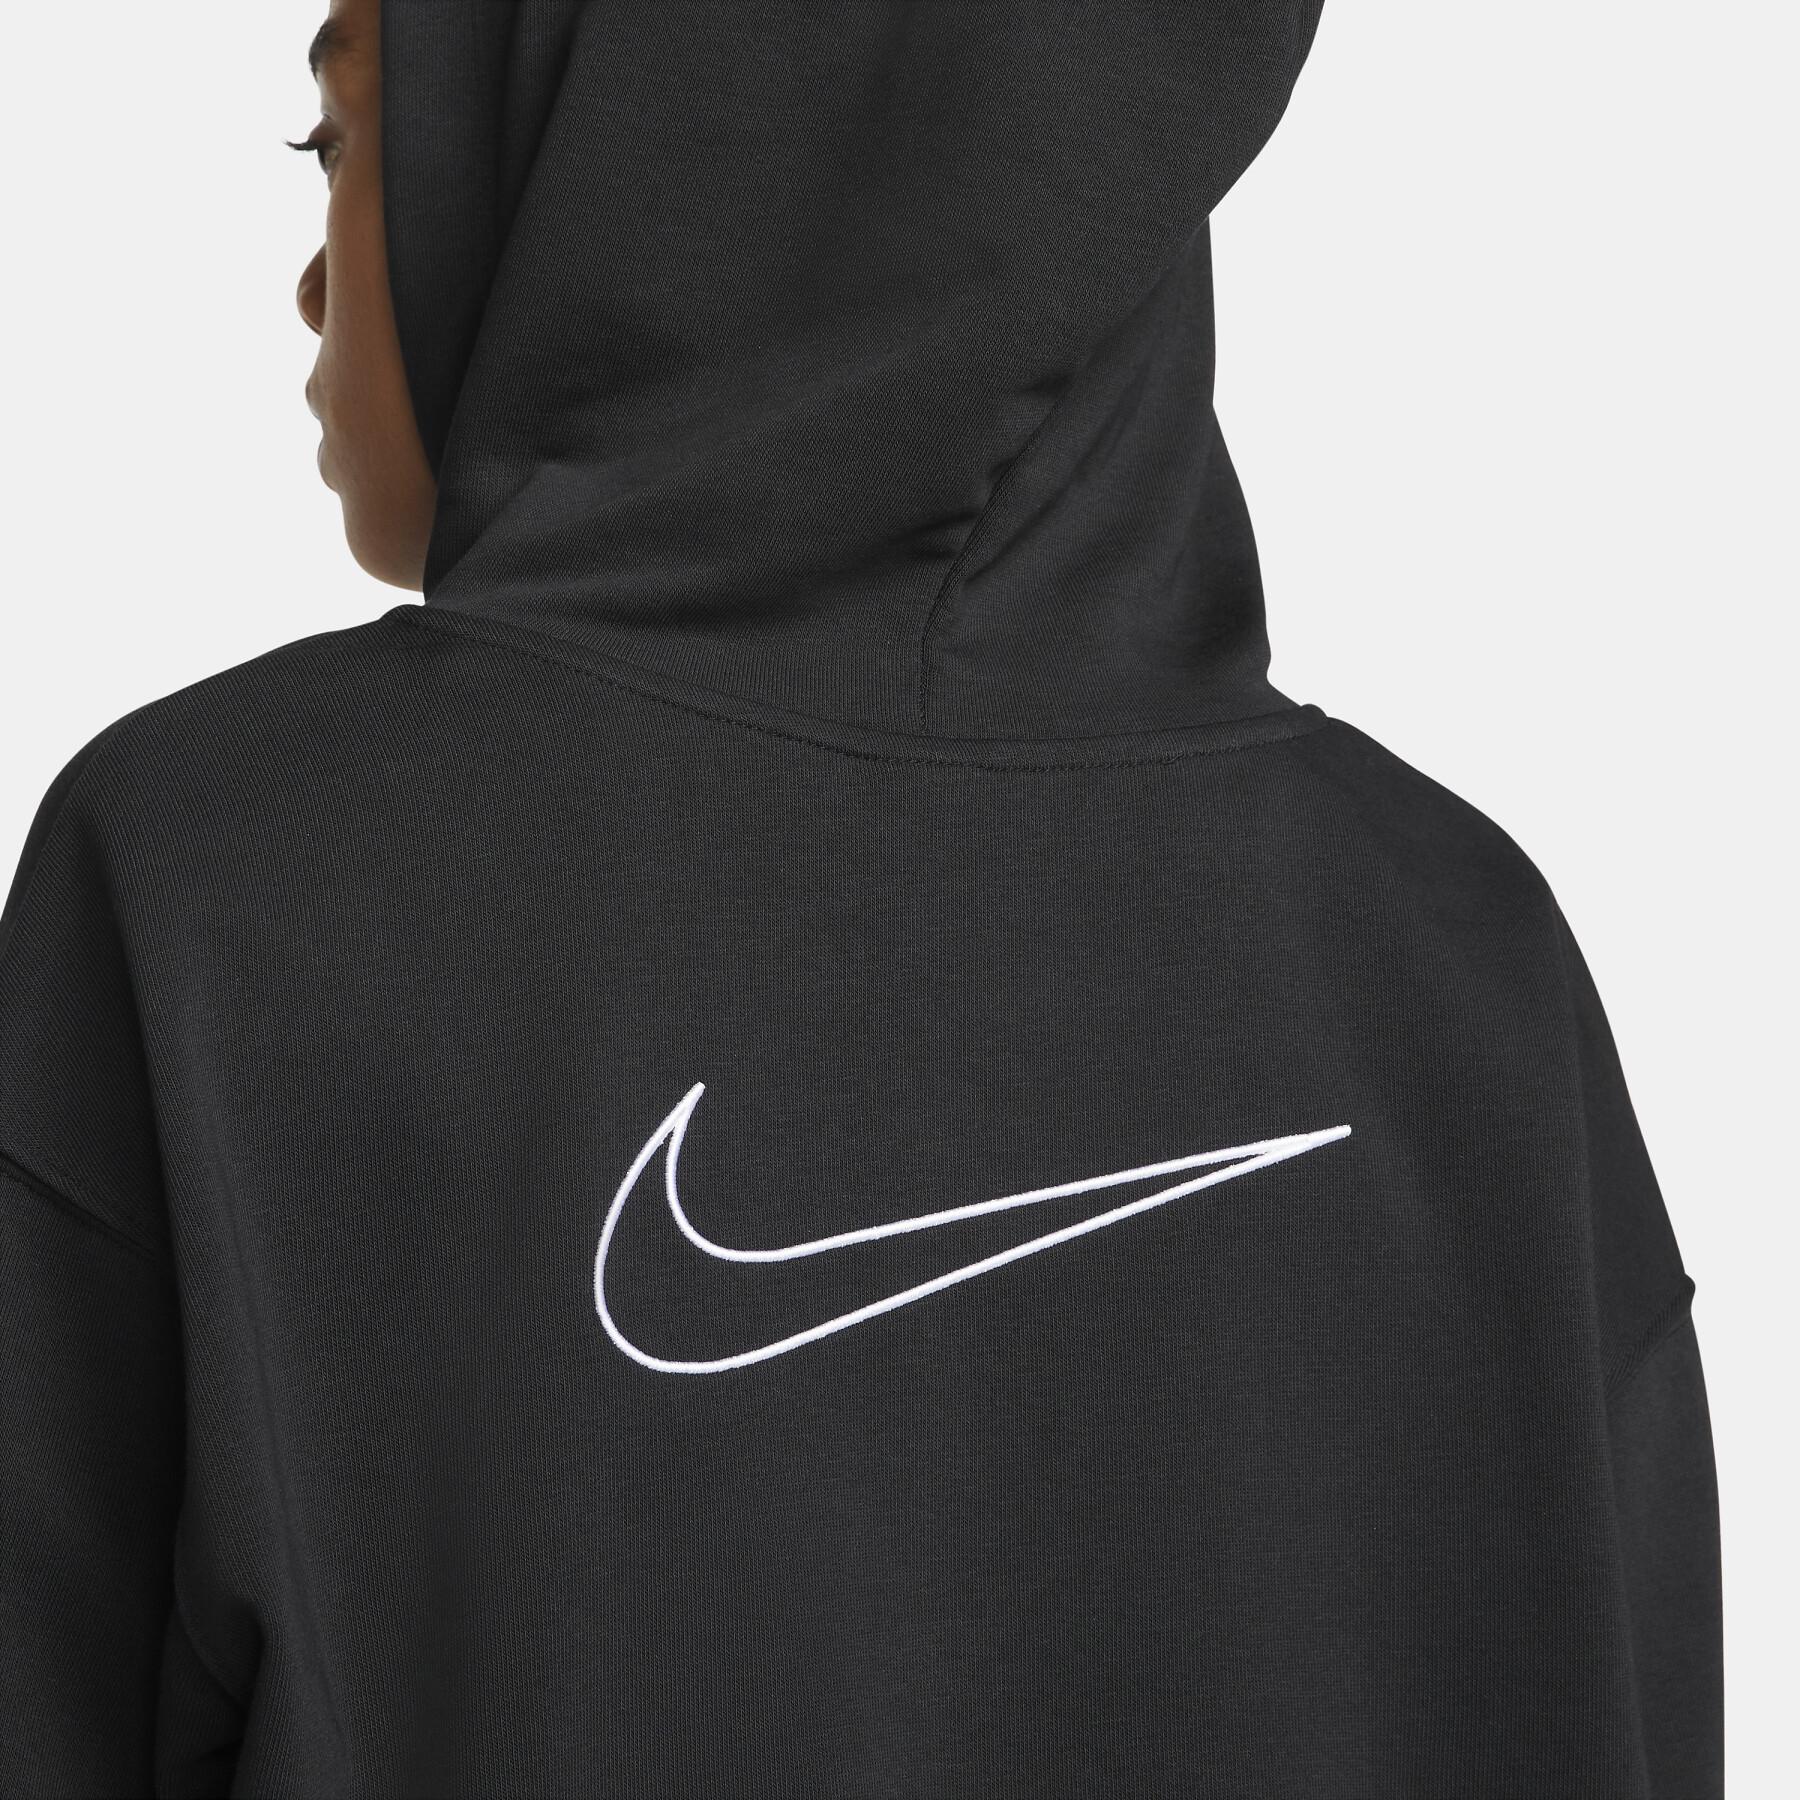 Sweatshirt women's hooded zipper Nike Dri-Fit Get Fit Graphic